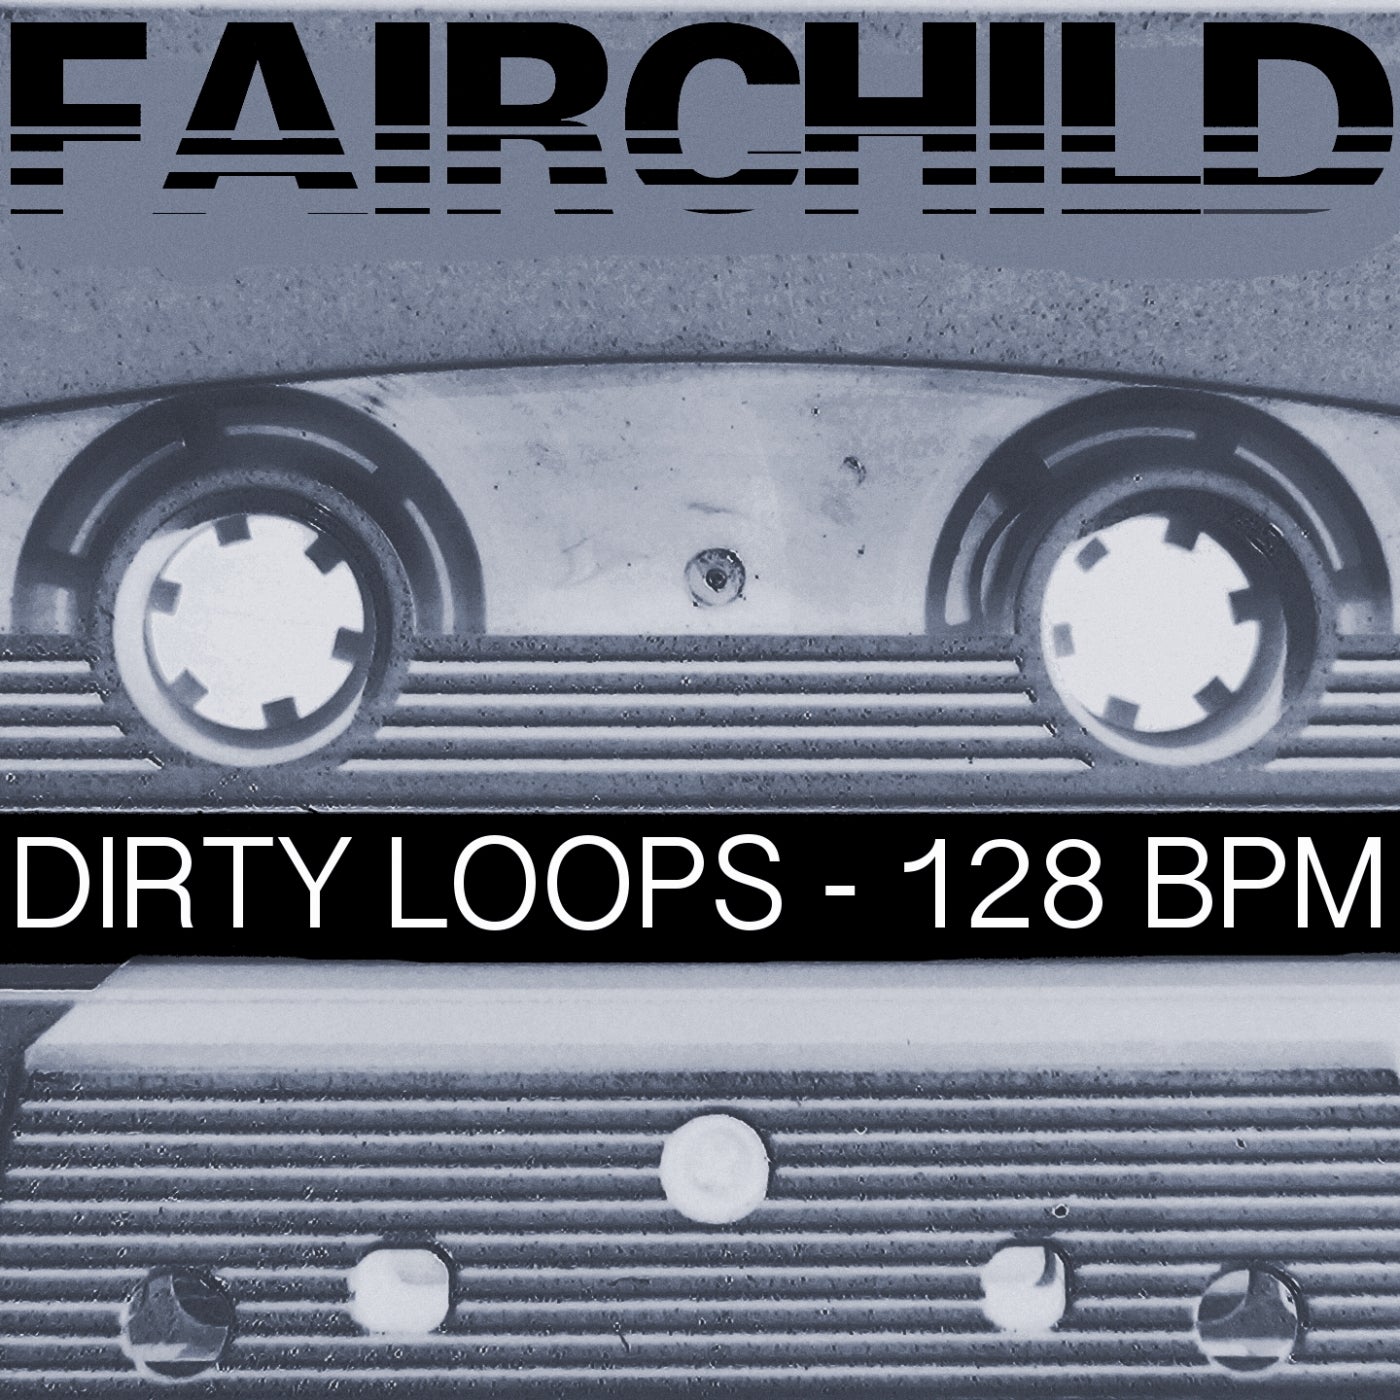 Dirty Loops - 128 BPM (Special DJ Tools)